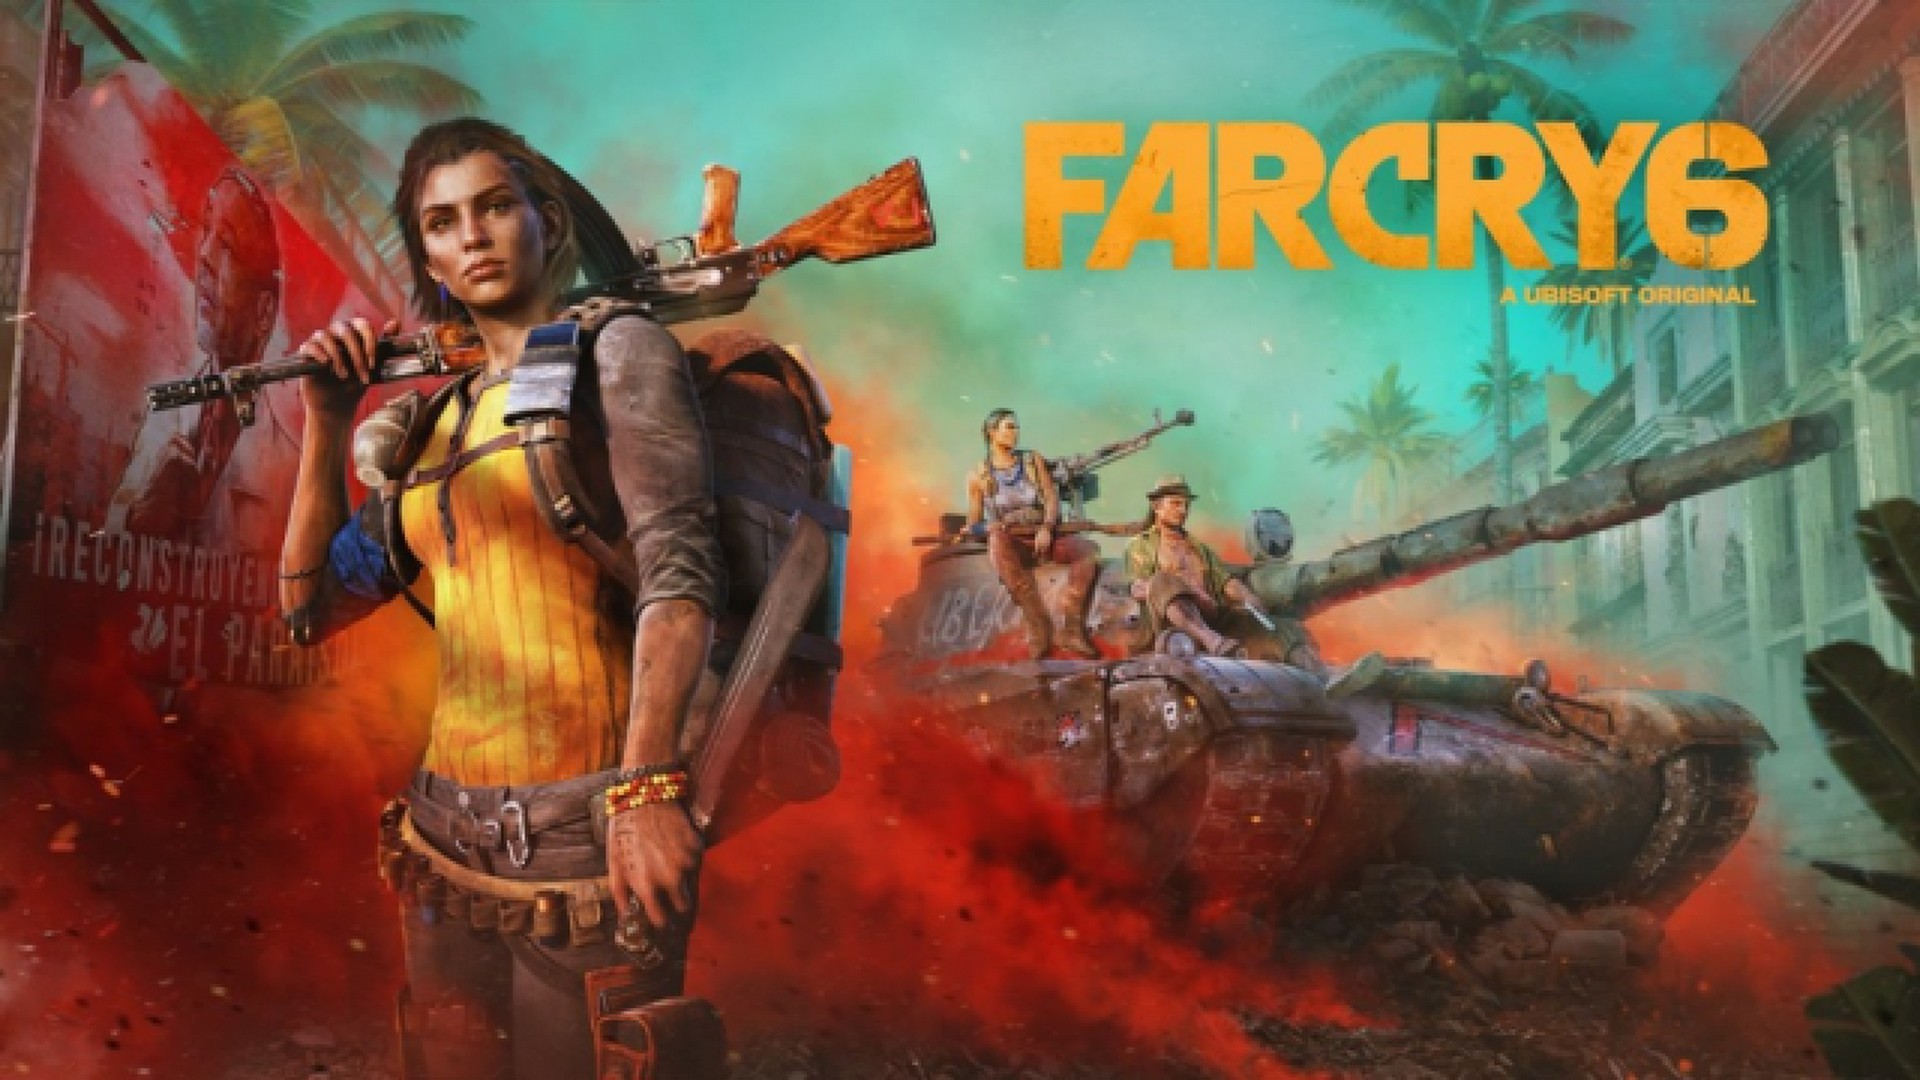 The Guerrilla Revolution Ignites In Far Cry 6 – Releasing October 7, 2021